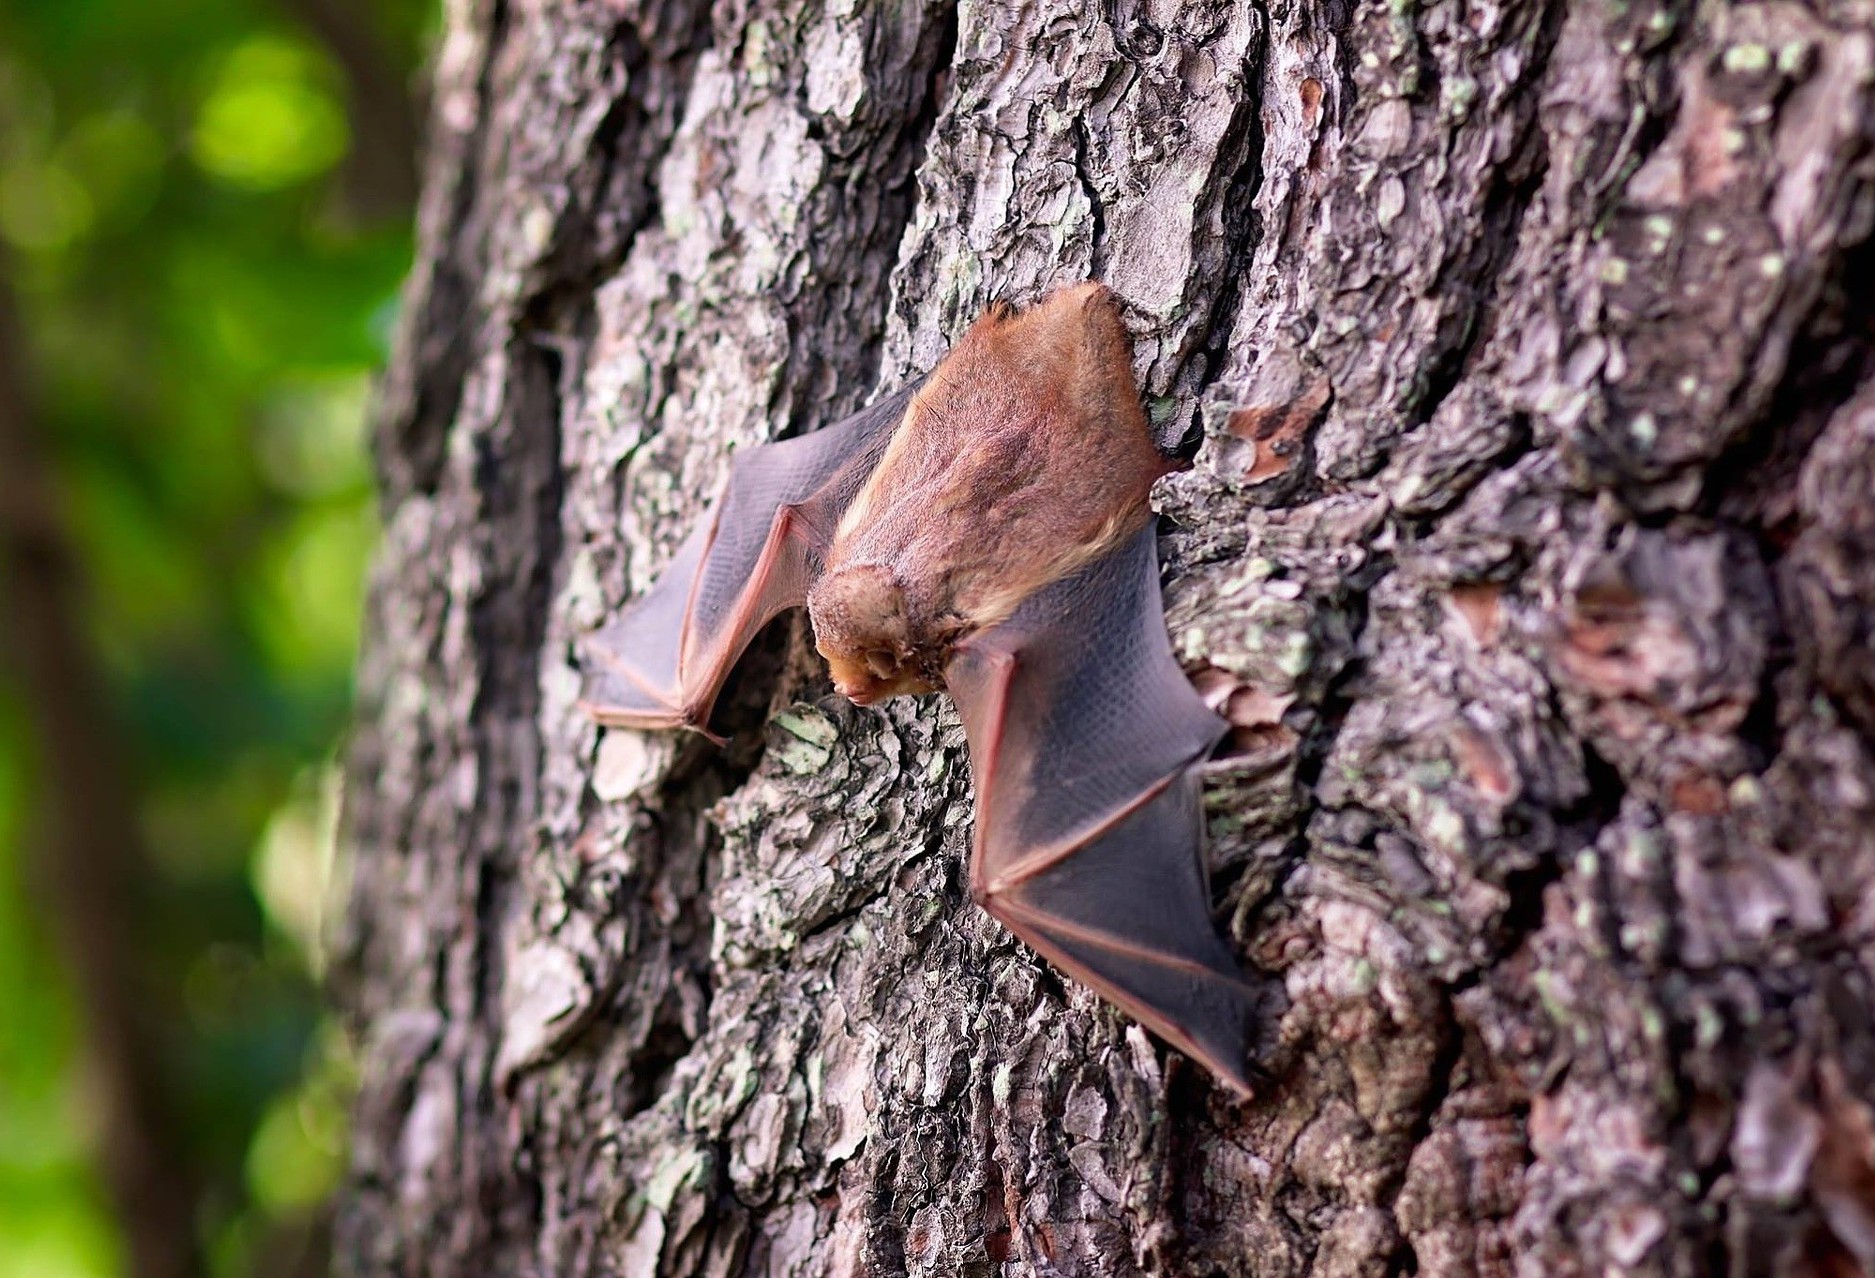 Morcego encontrado no bairro Brasilia teve resultado positivo para raiva 